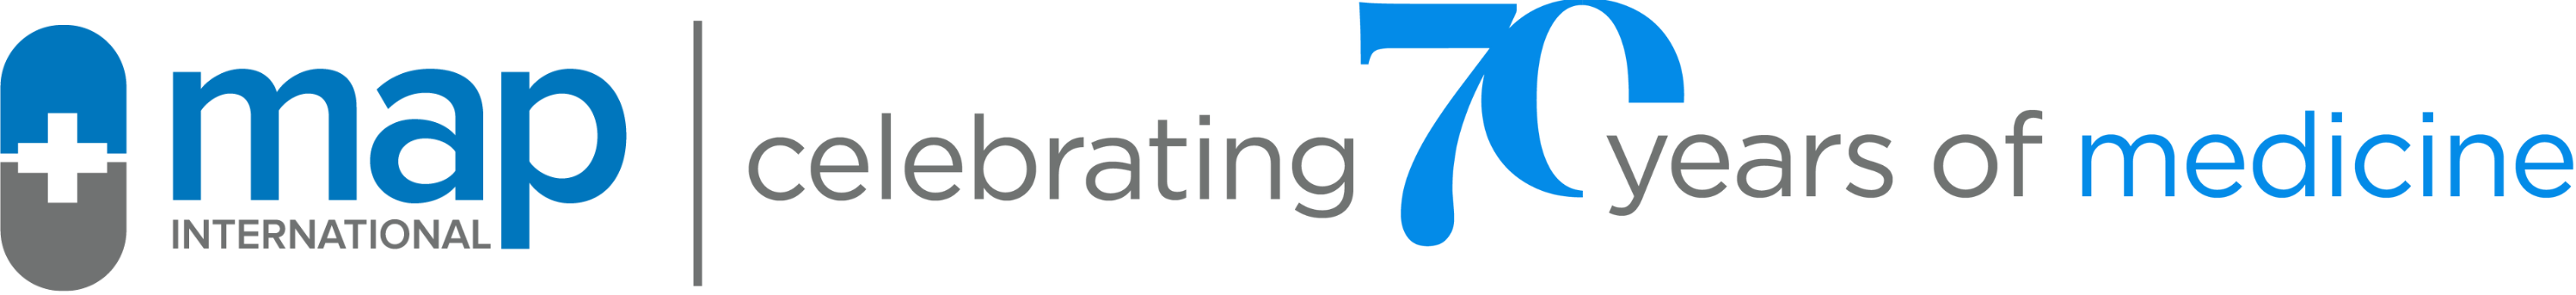 MAP 70th year logo